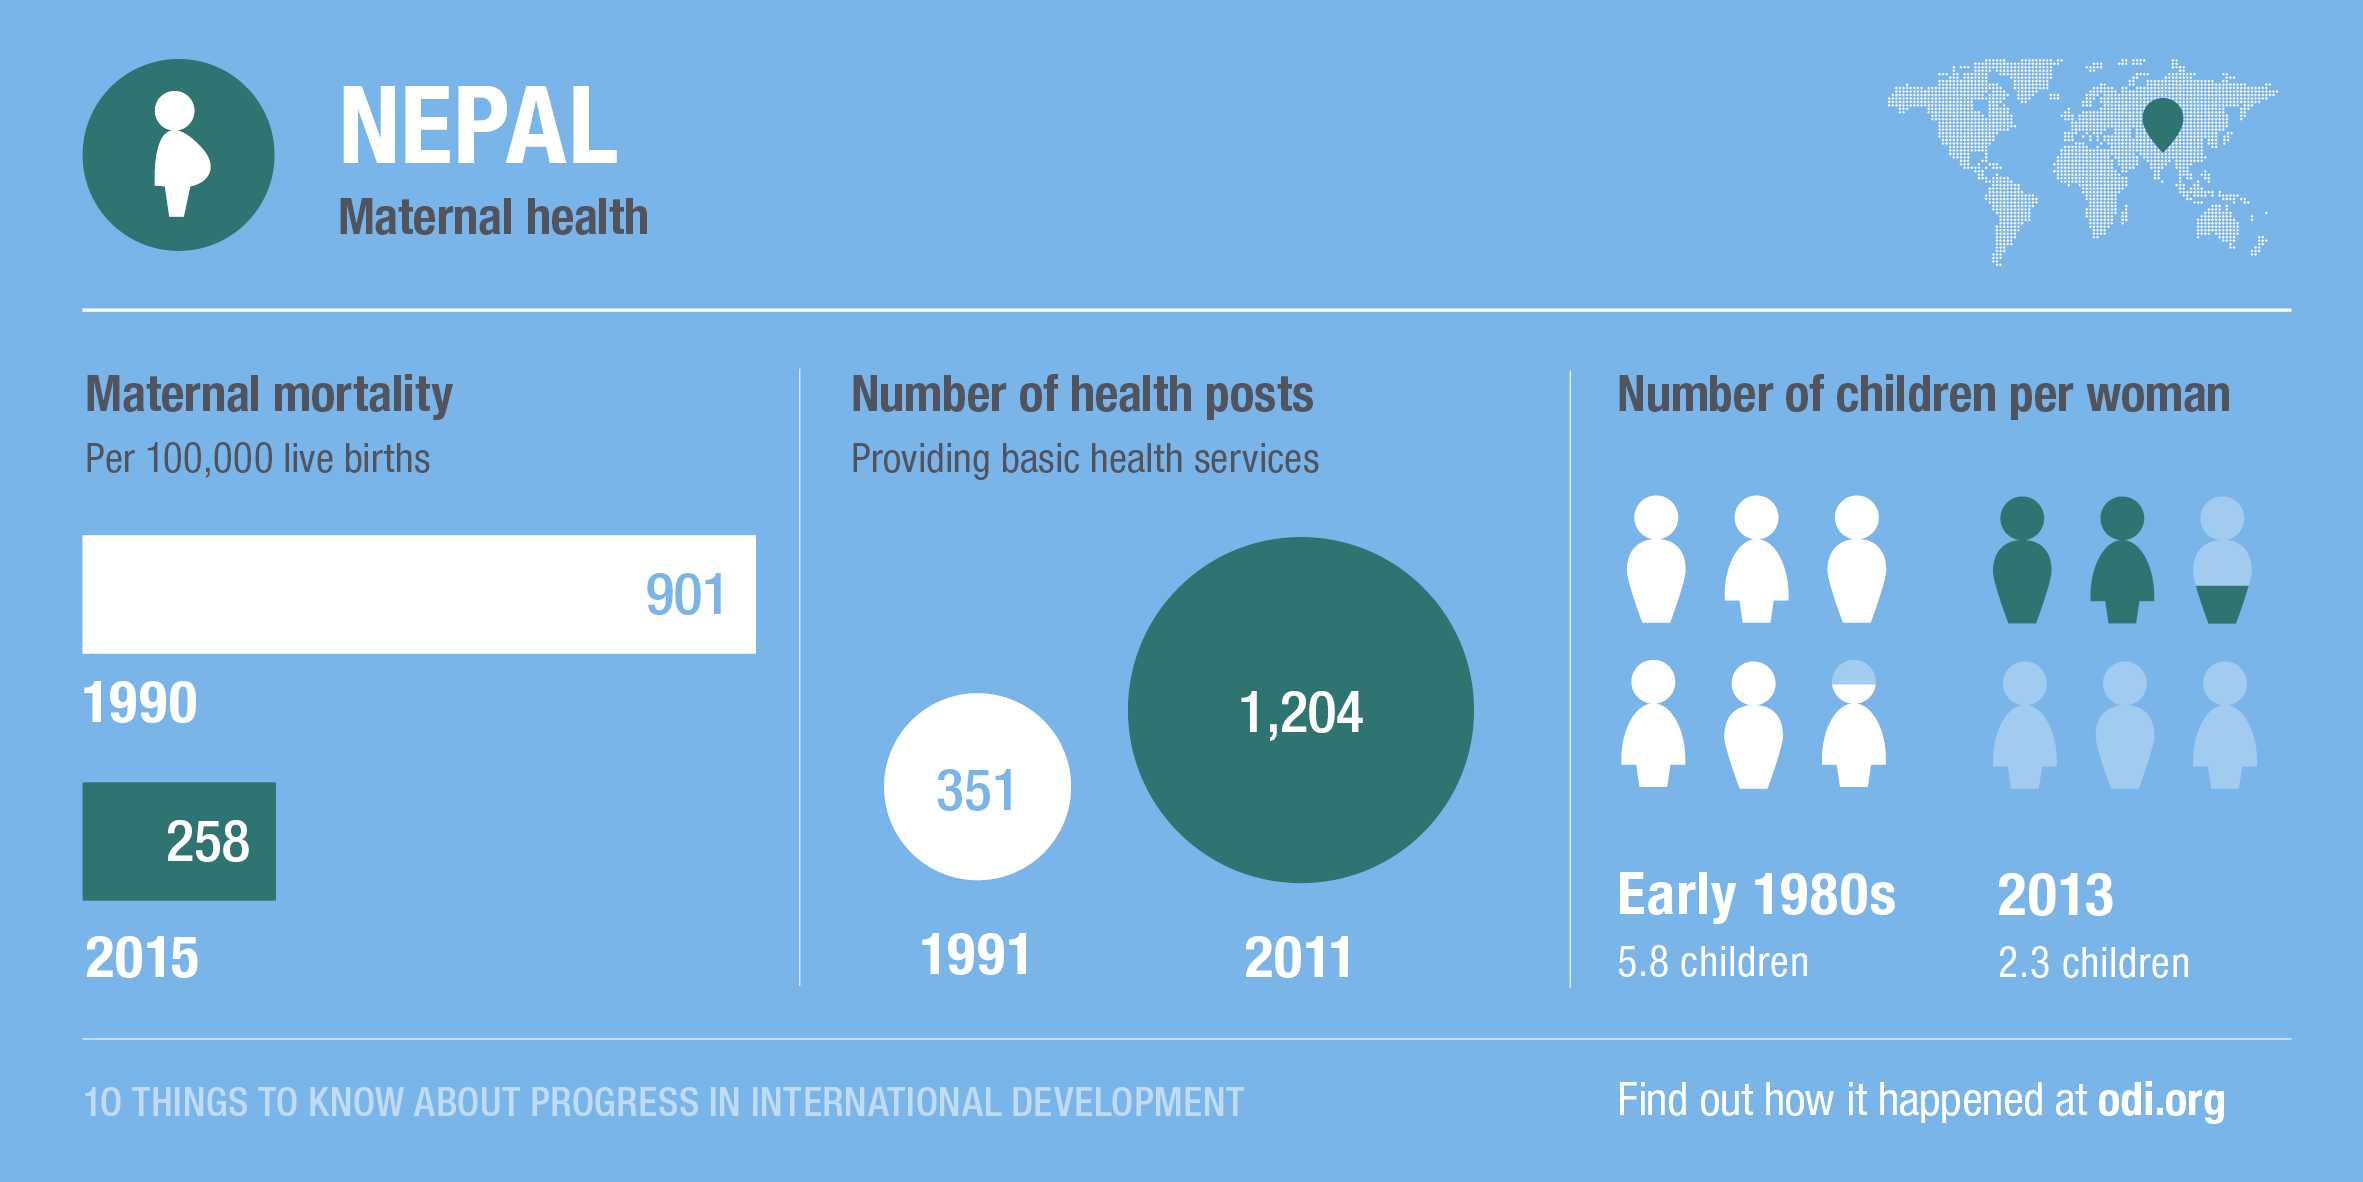 Nepal's progress on maternal mortality